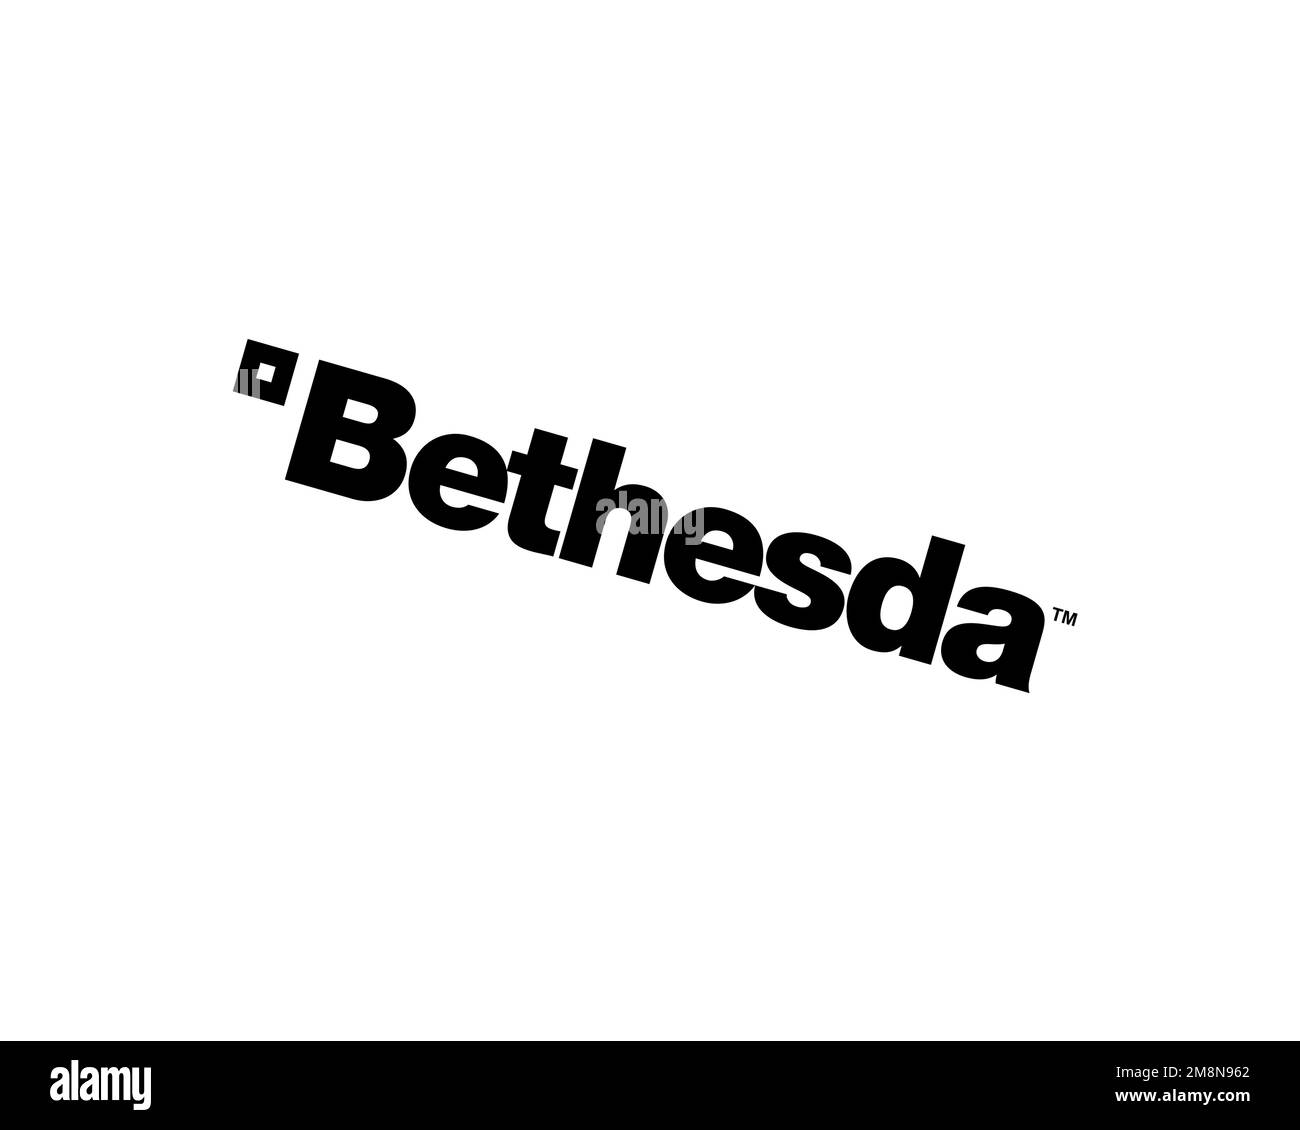 Bethesda Softworks, rotated logo, white background B Stock Photo